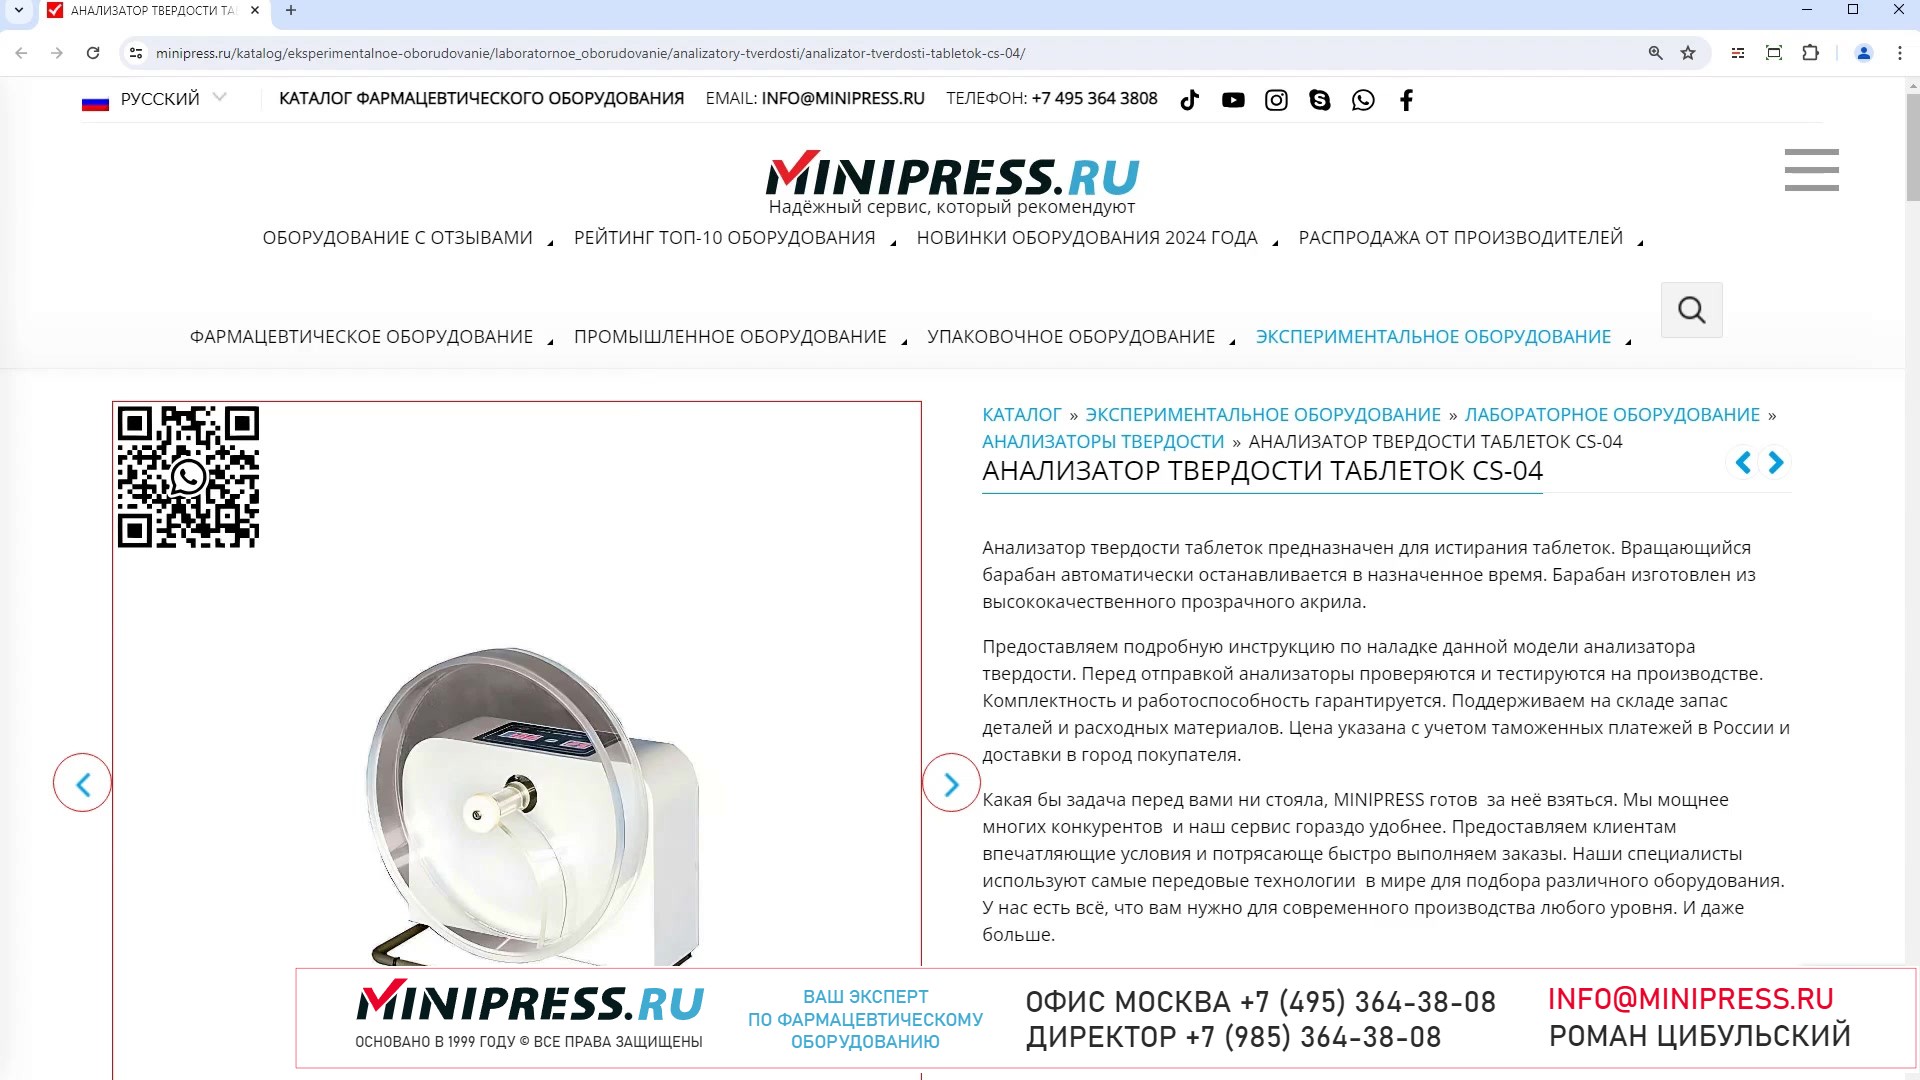 Minipress.ru Анализатор твердости таблеток CS-04